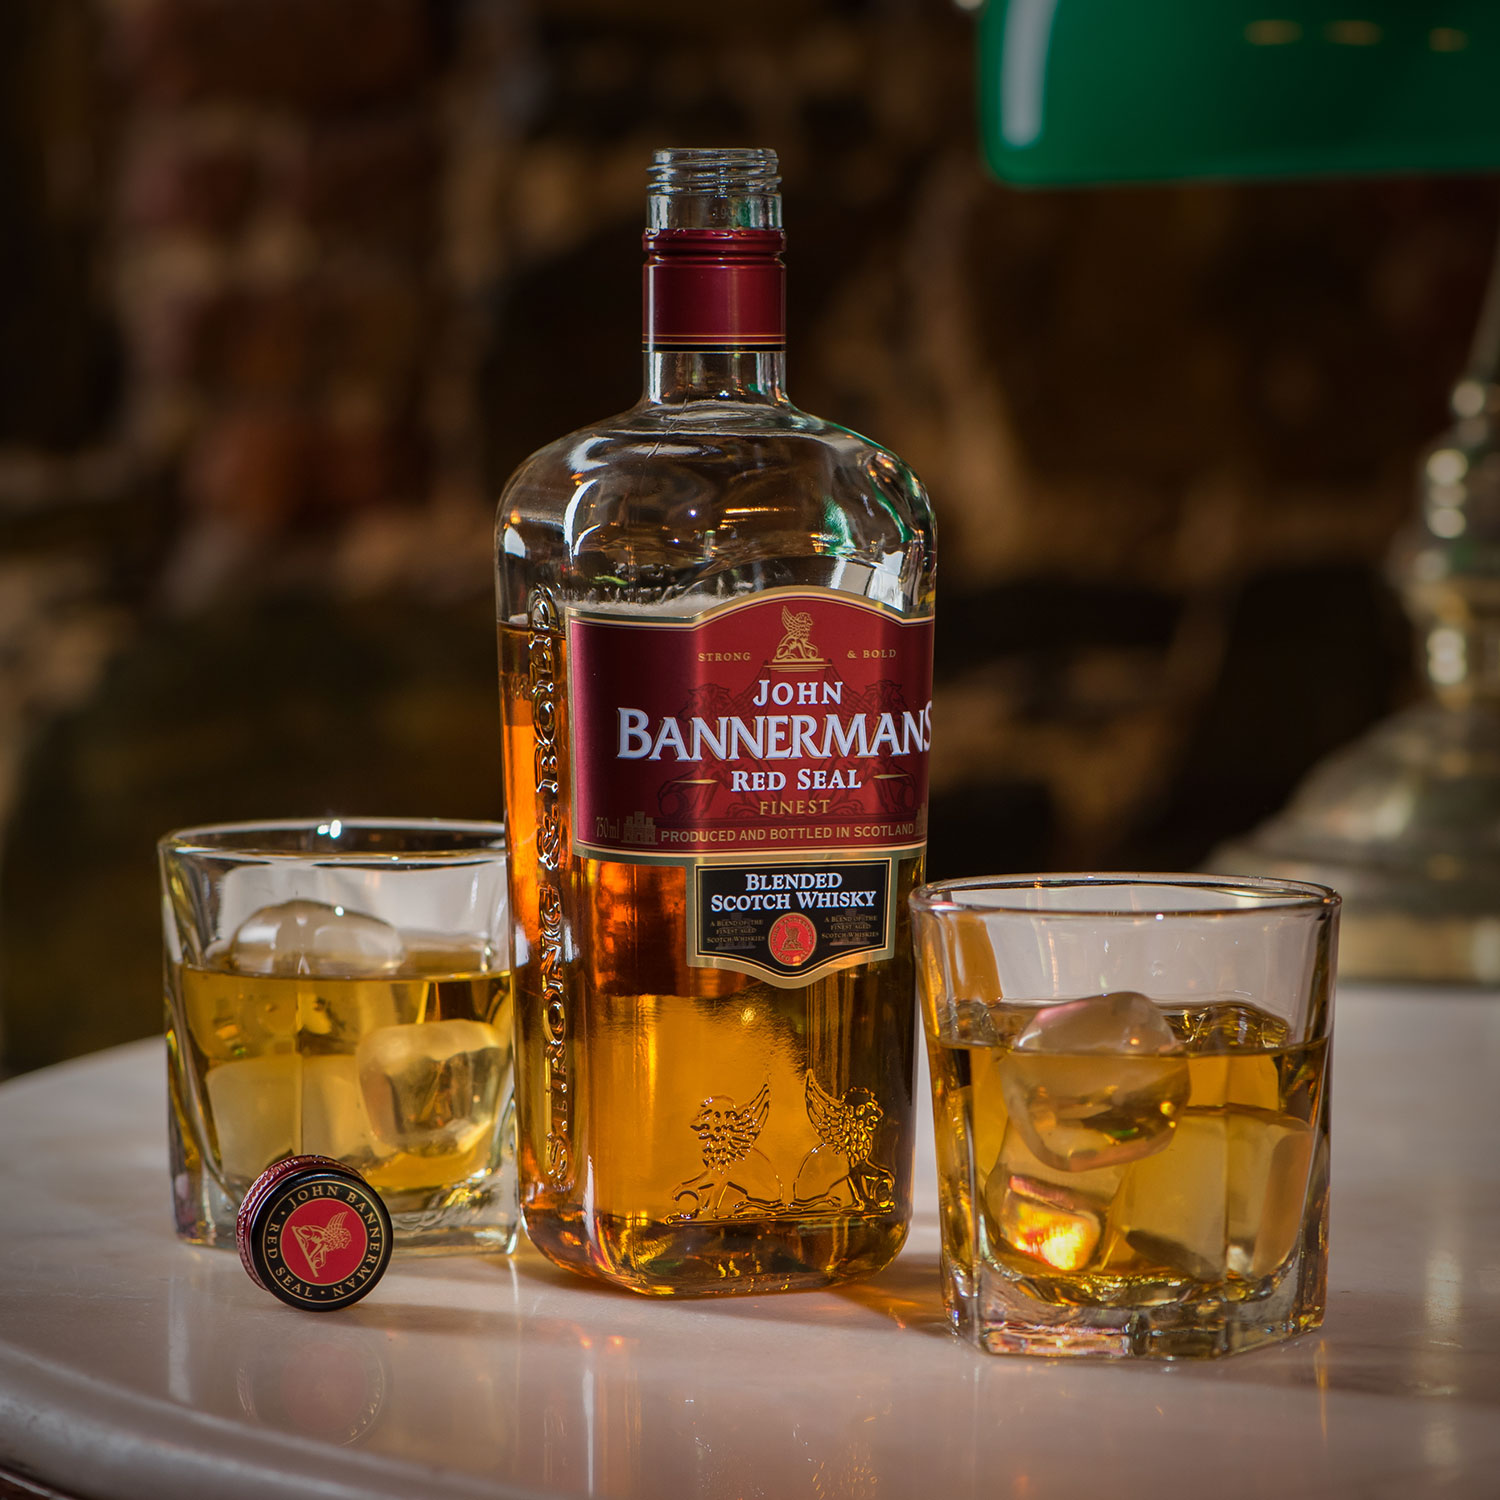 Bannermans Whisky